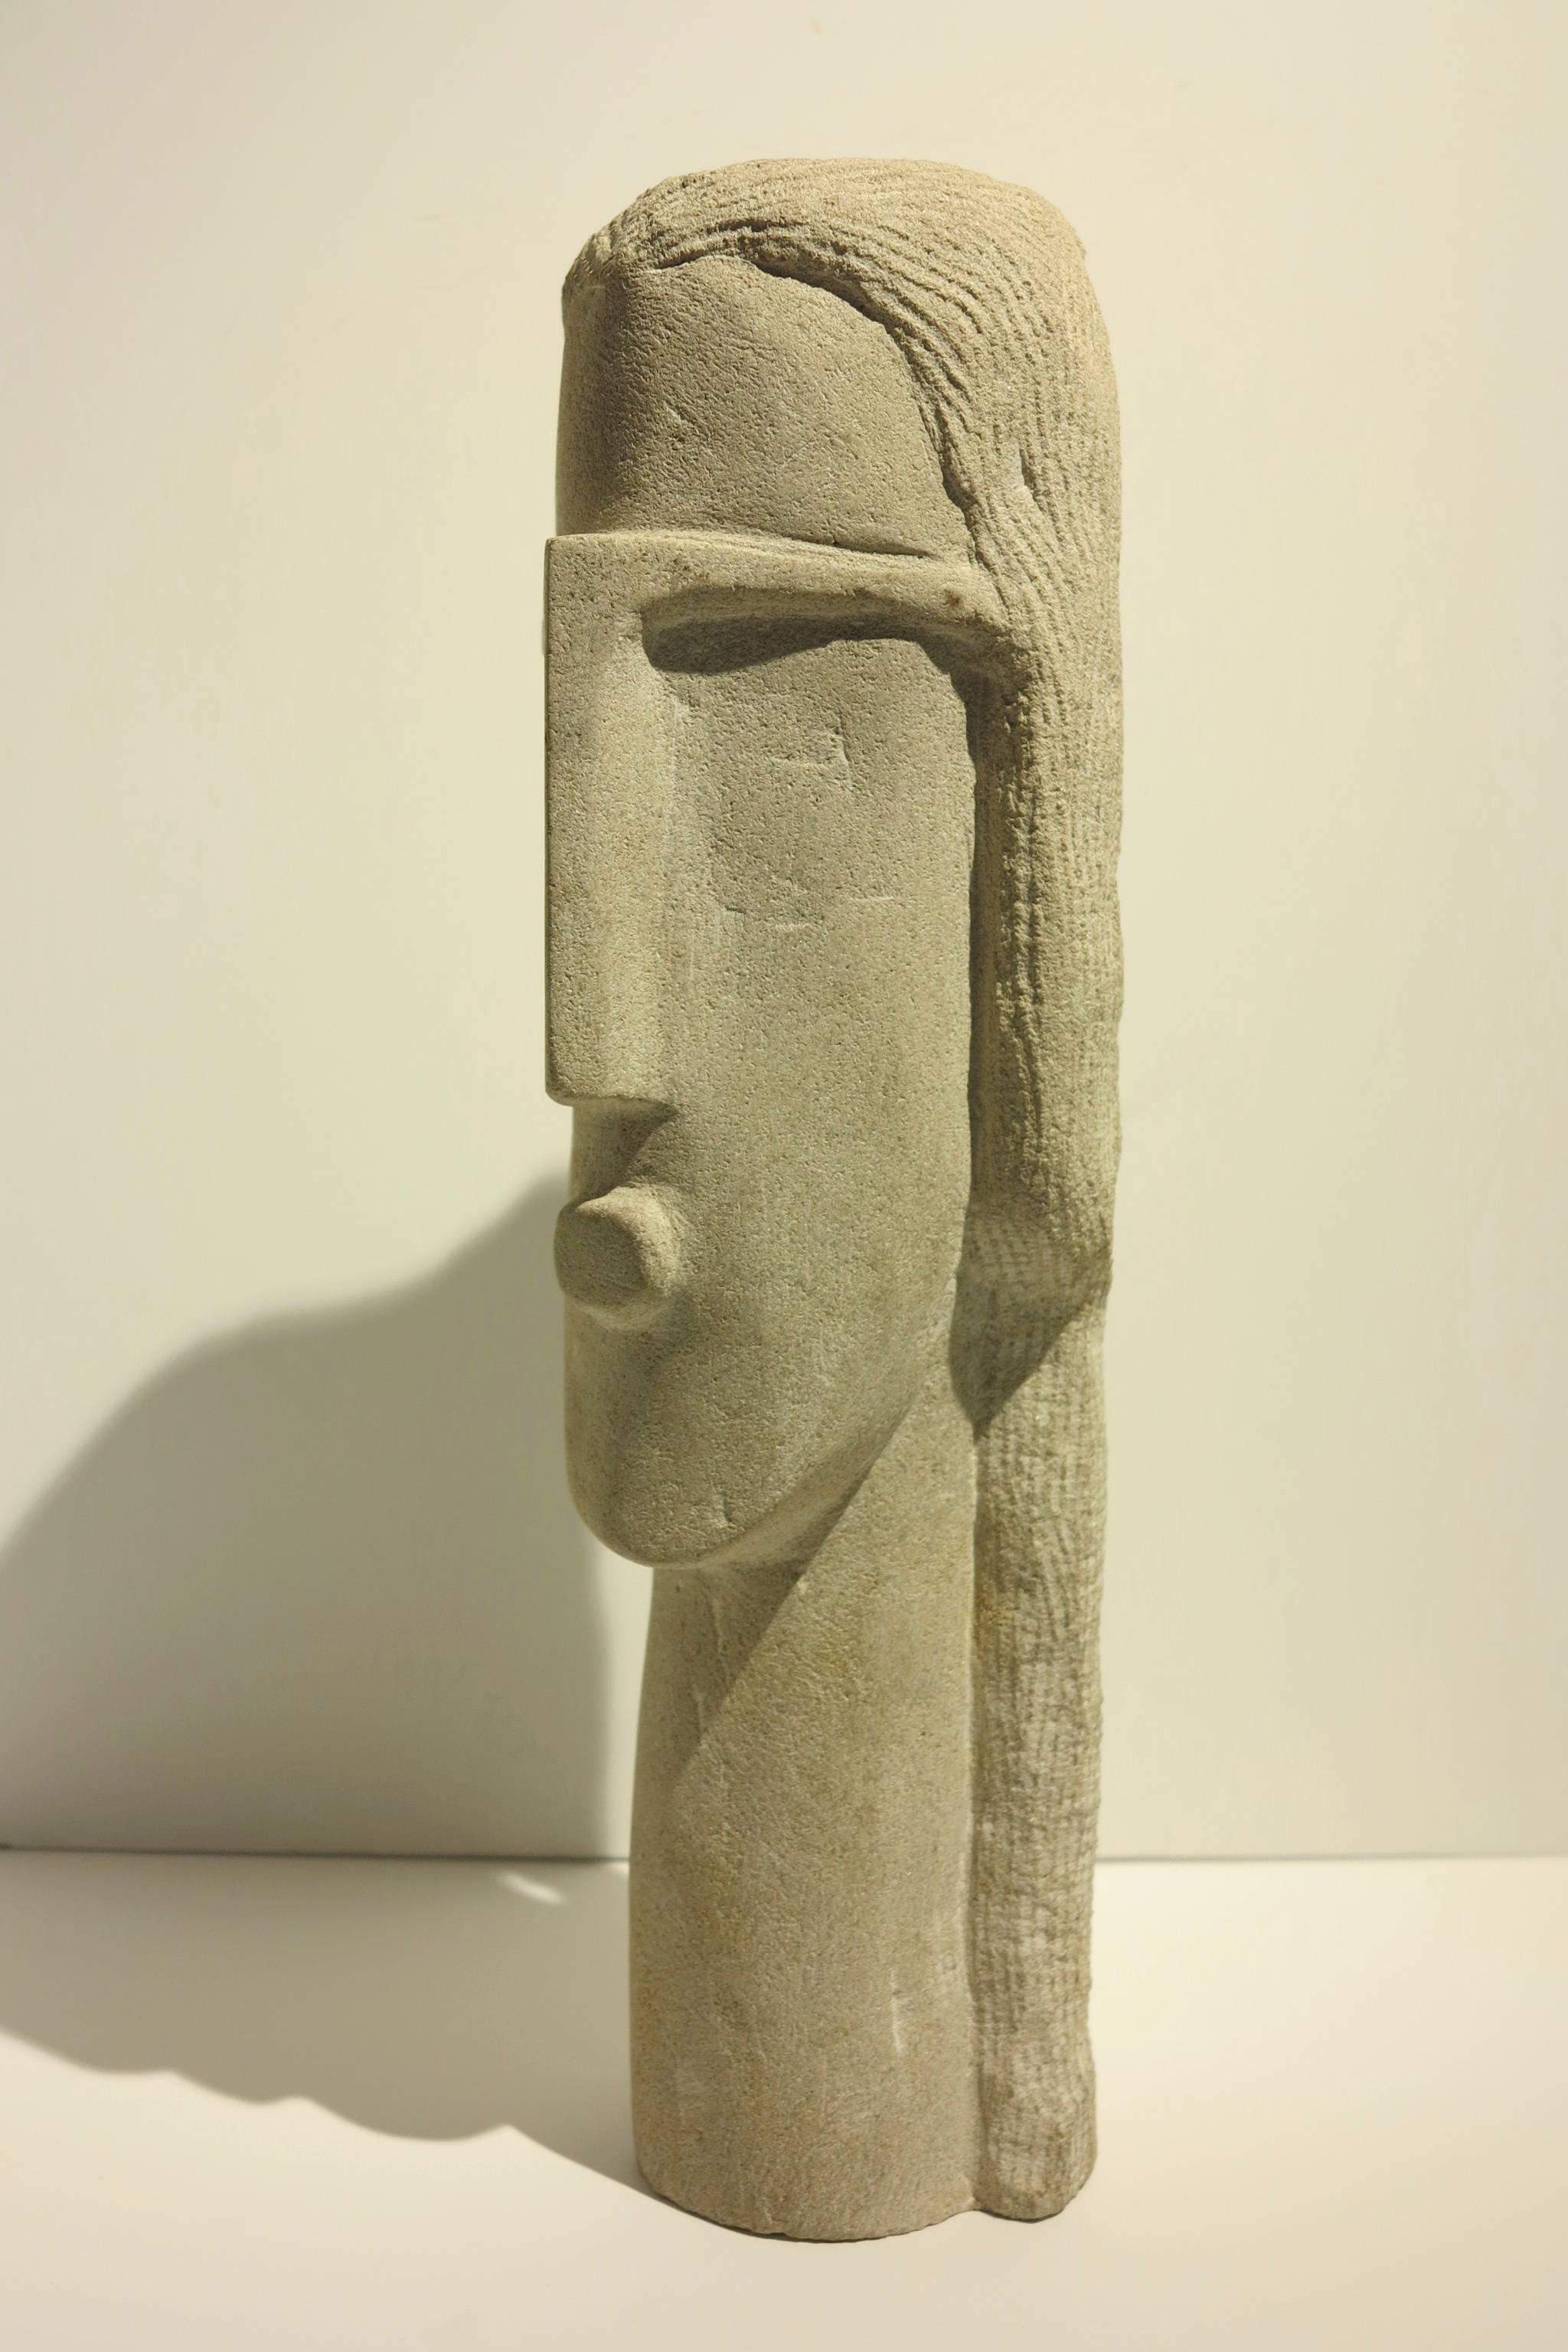 Head of Woman - Sculpture by Umana (Rafael Alfonso Umaña Mendez)